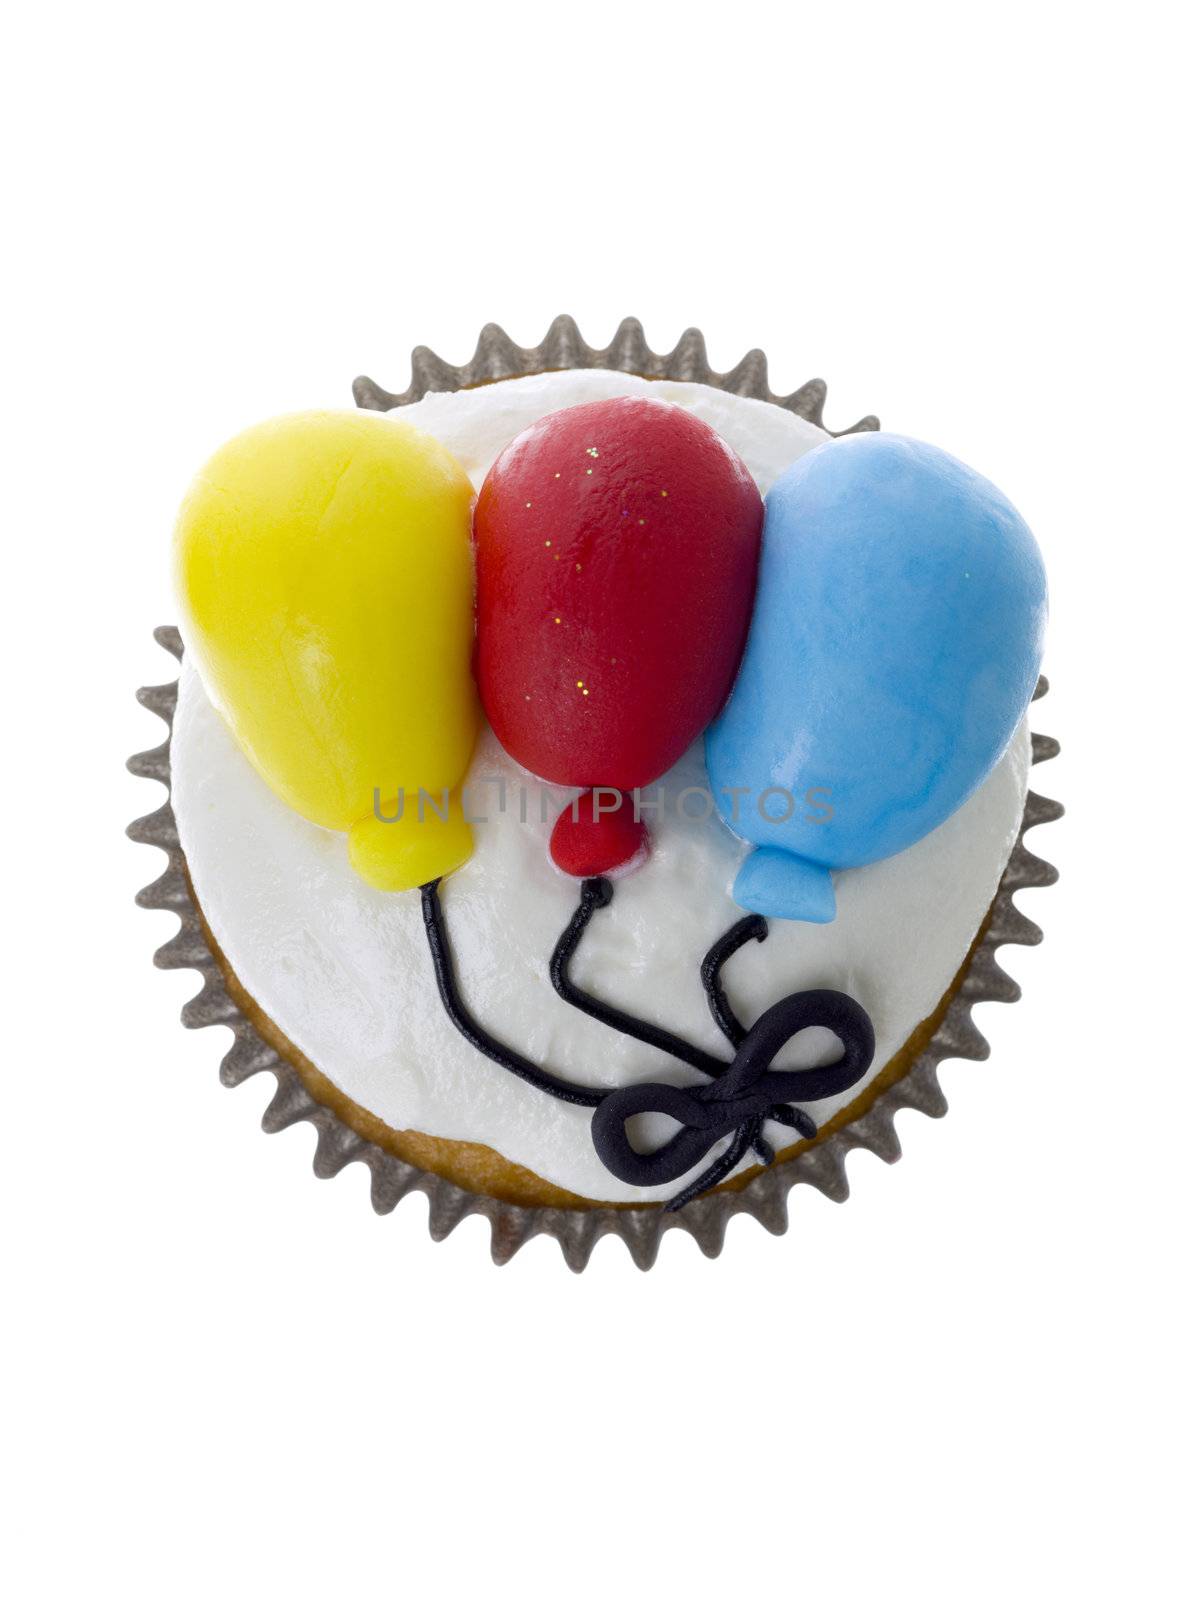 balloon cupcake by kozzi